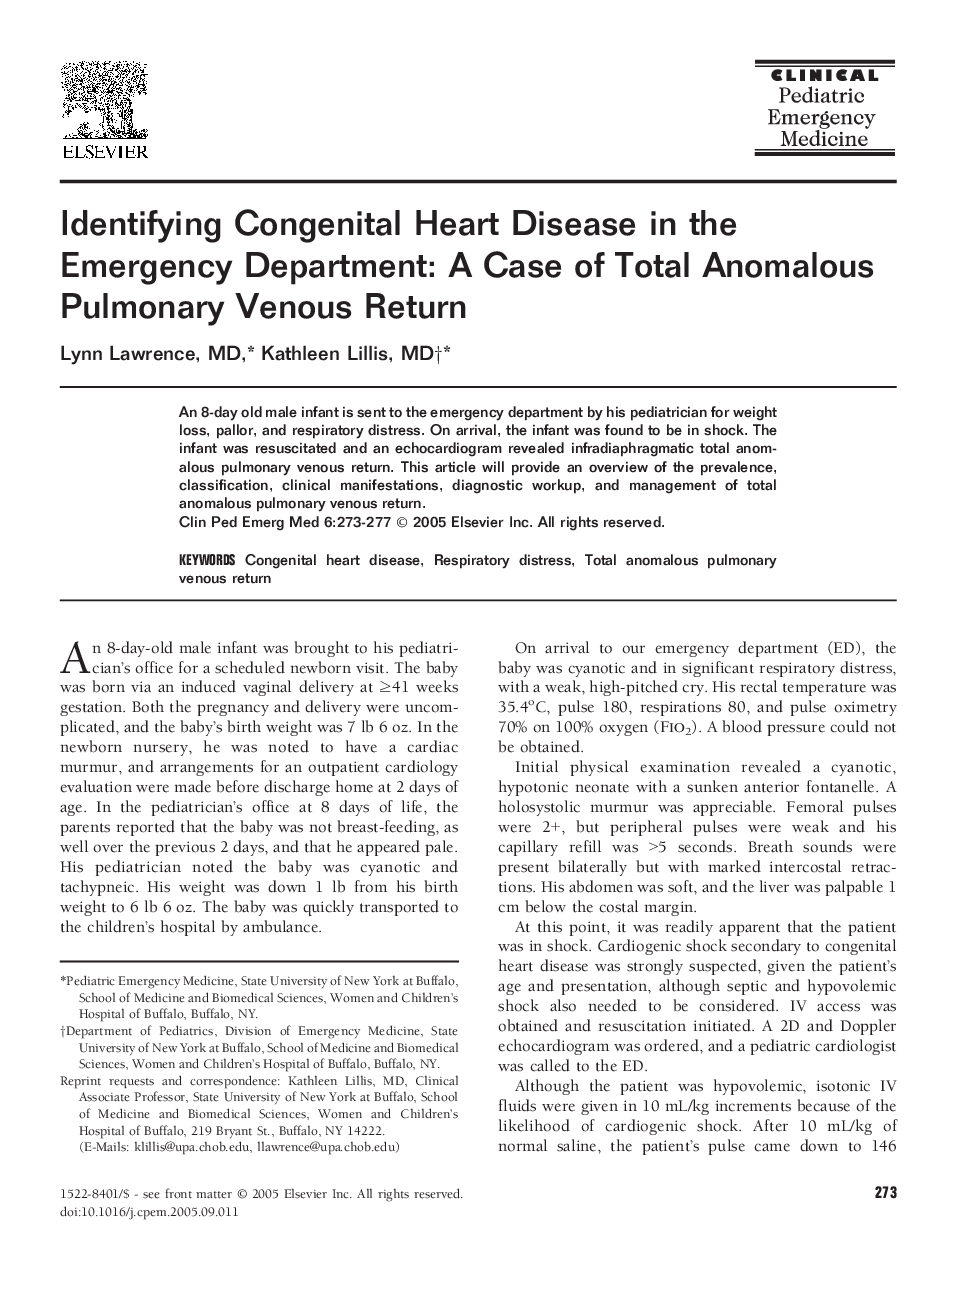 Identifying Congenital Heart Disease in the Emergency Department: A Case of Total Anomalous Pulmonary Venous Return